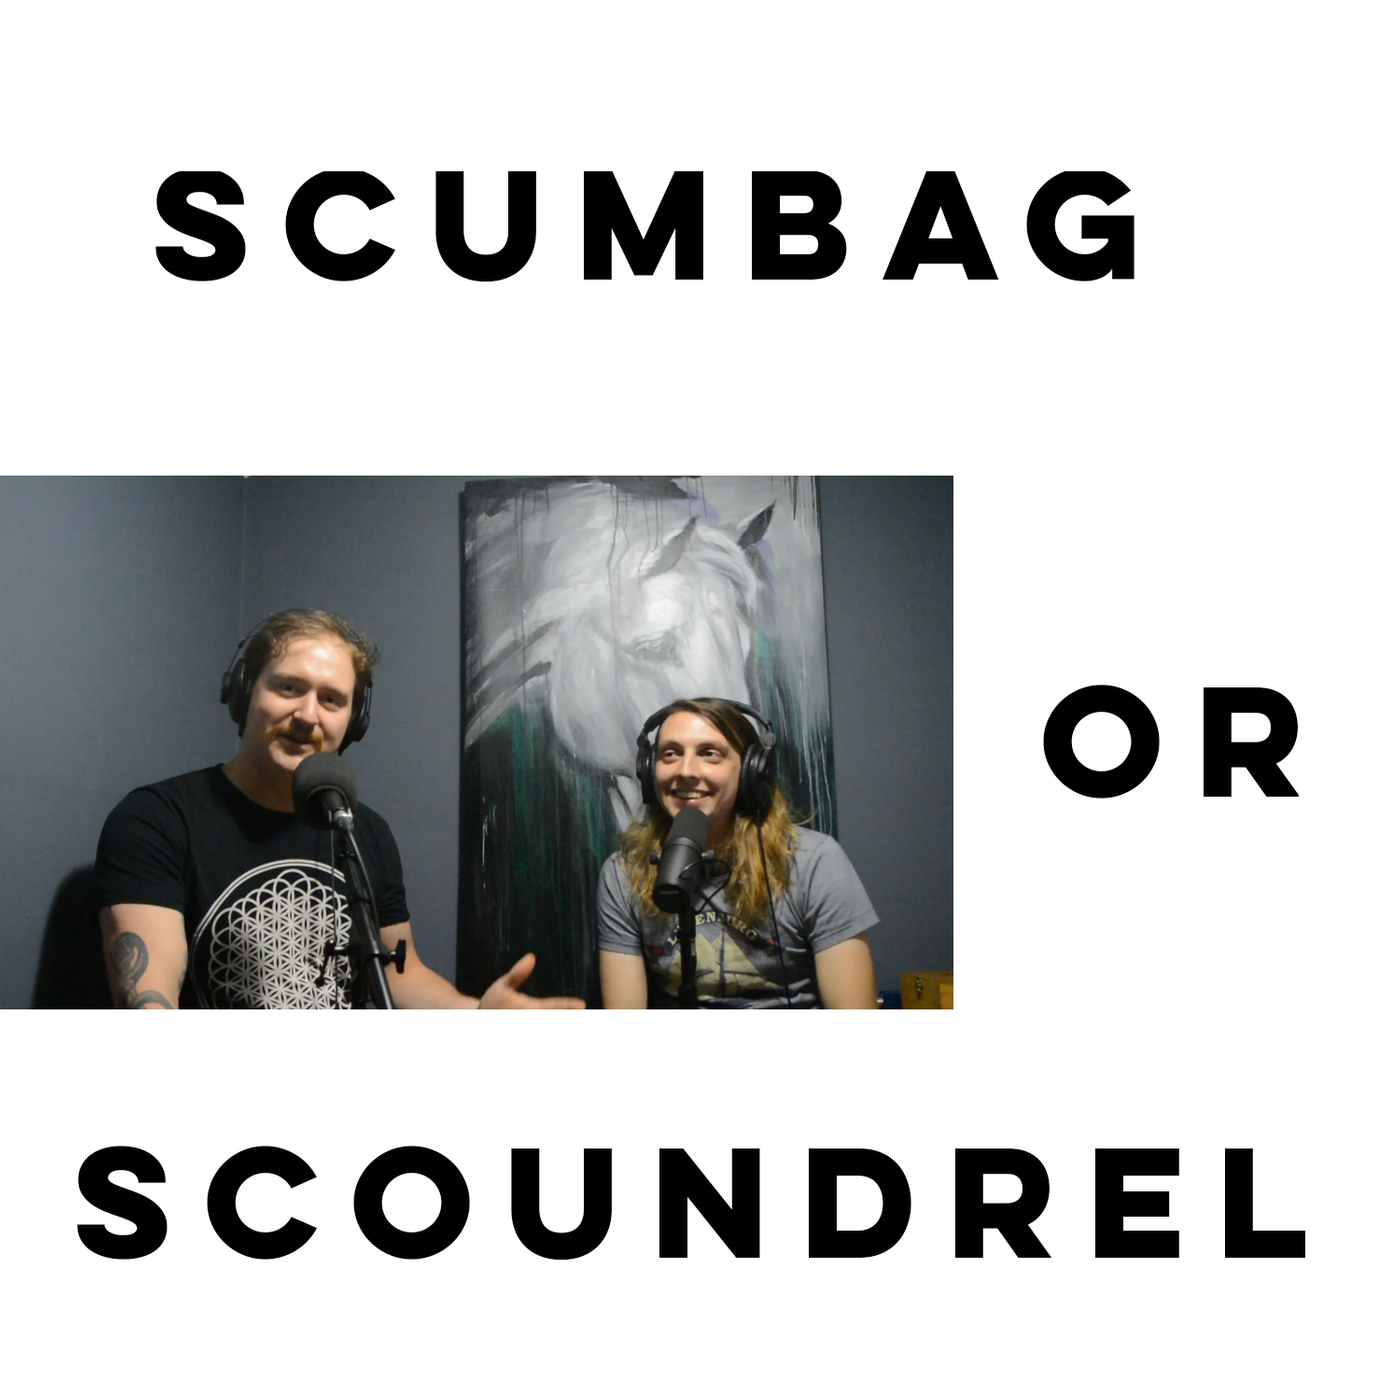 Scumbag or Scoundrel